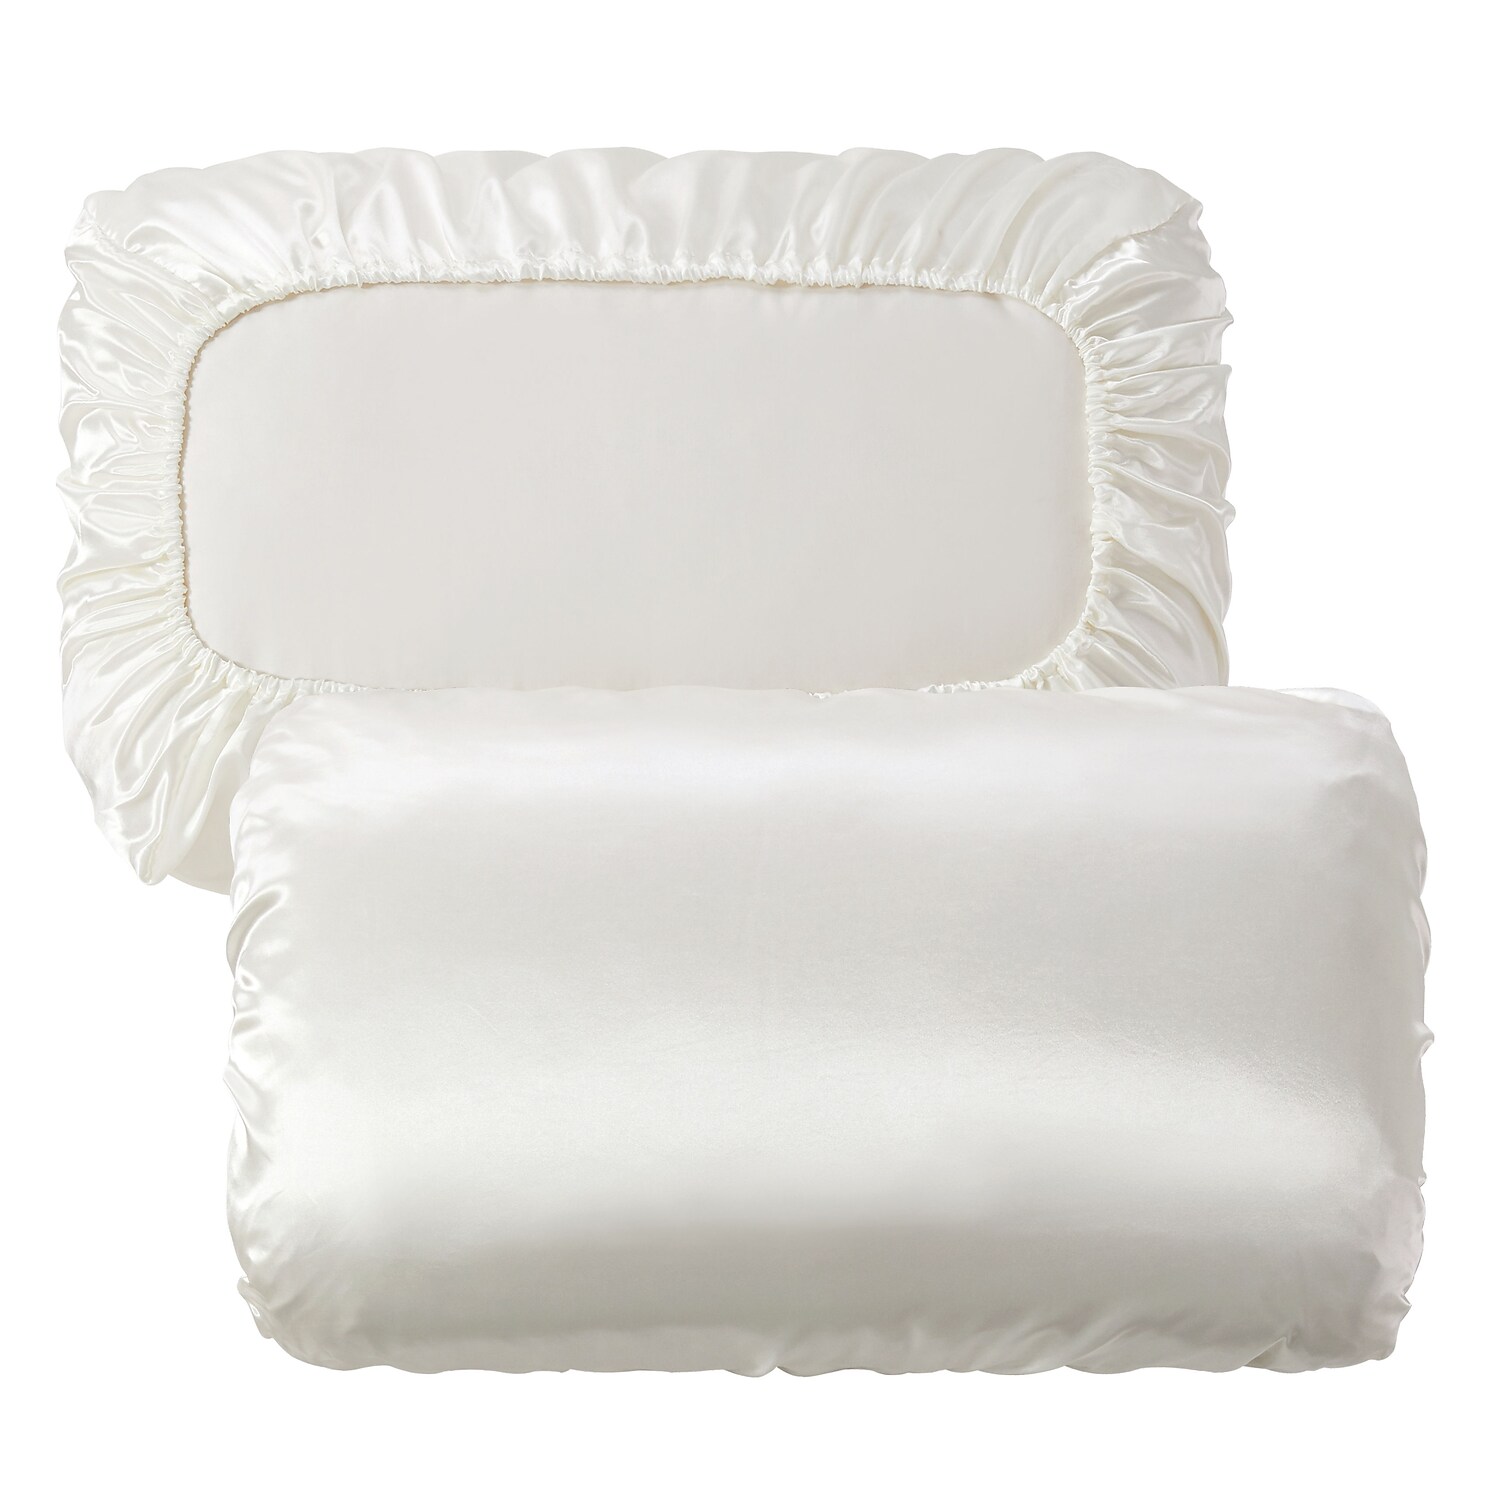 Luxury Satin Pillowcase for Hair Standard Satin Pillowcase with Elastic Band, Pillowcase Set of 2